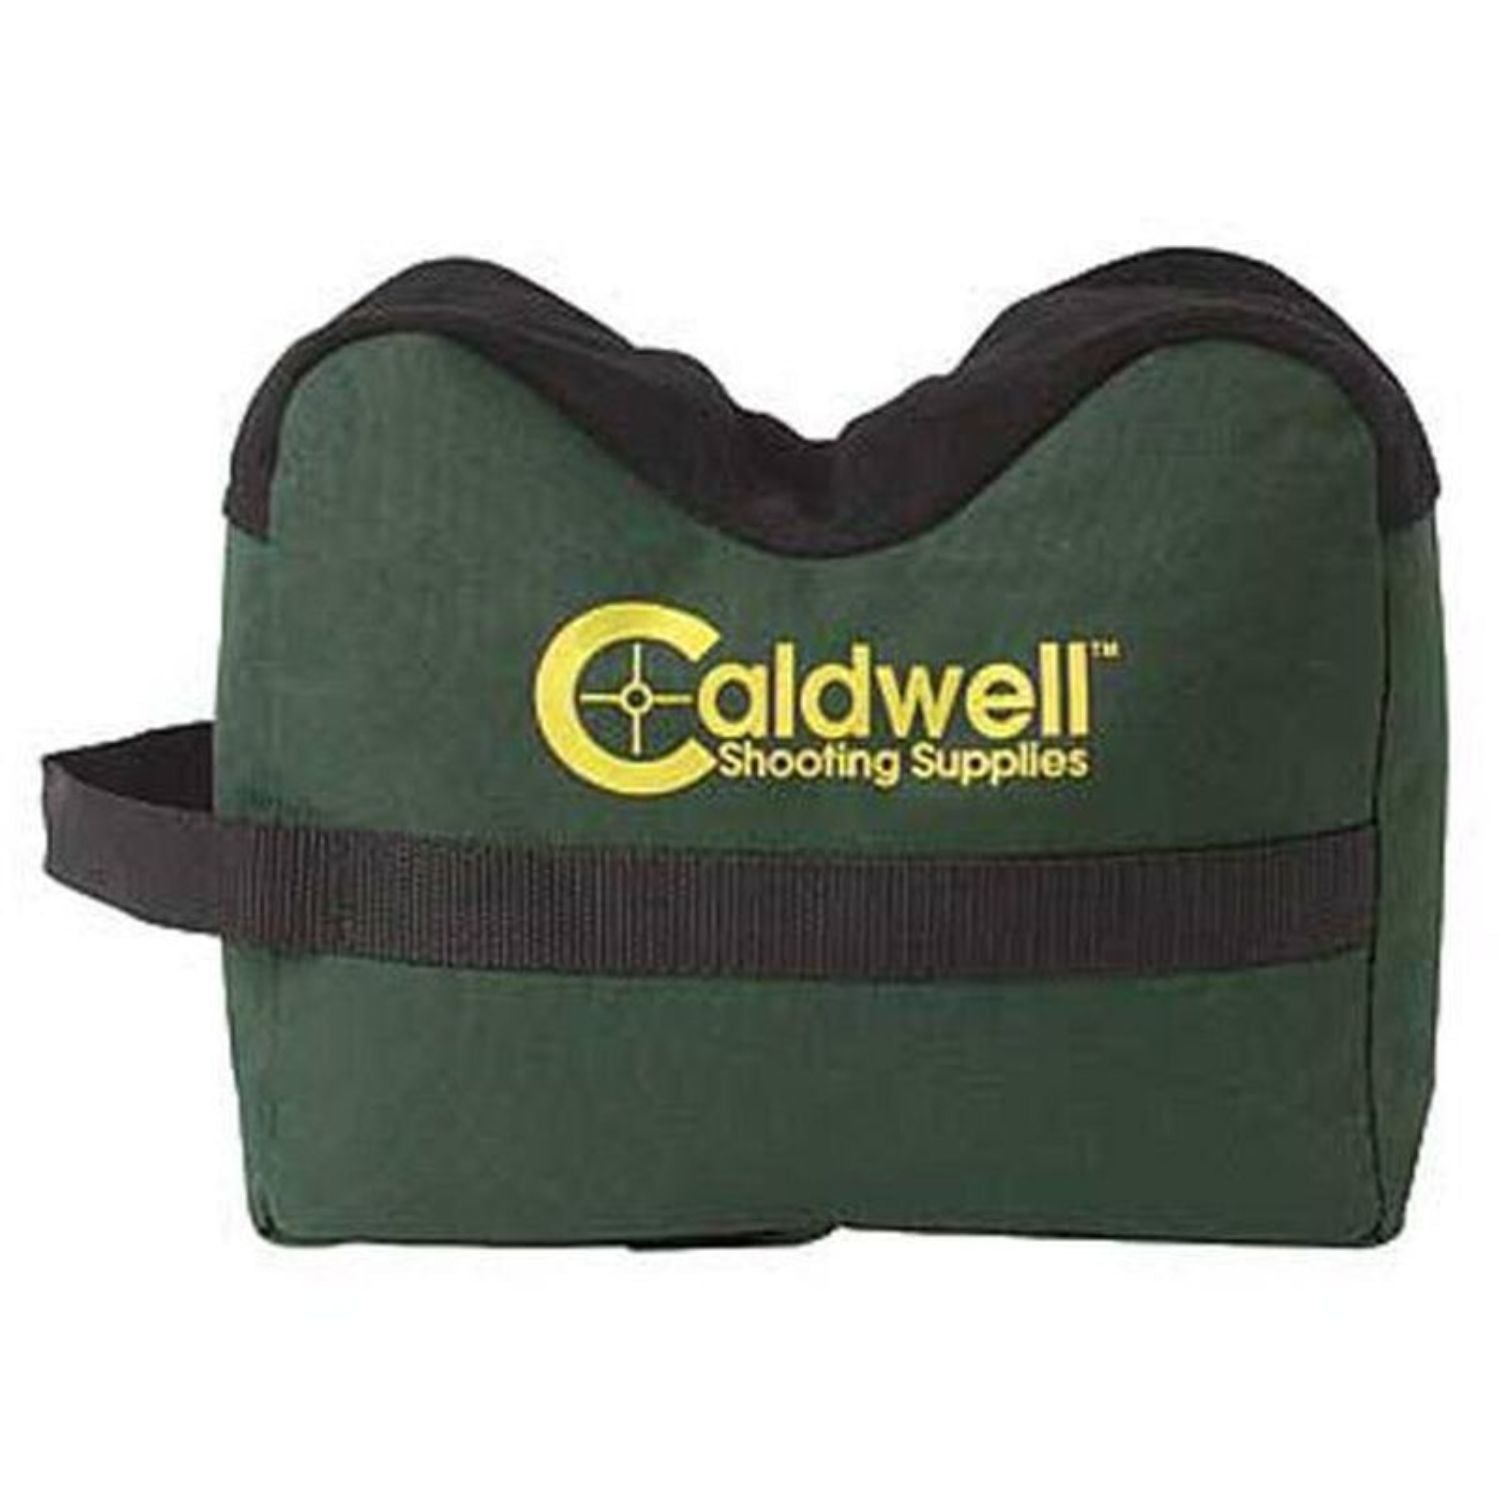 Caldwell Deadshot Front Bag Filled